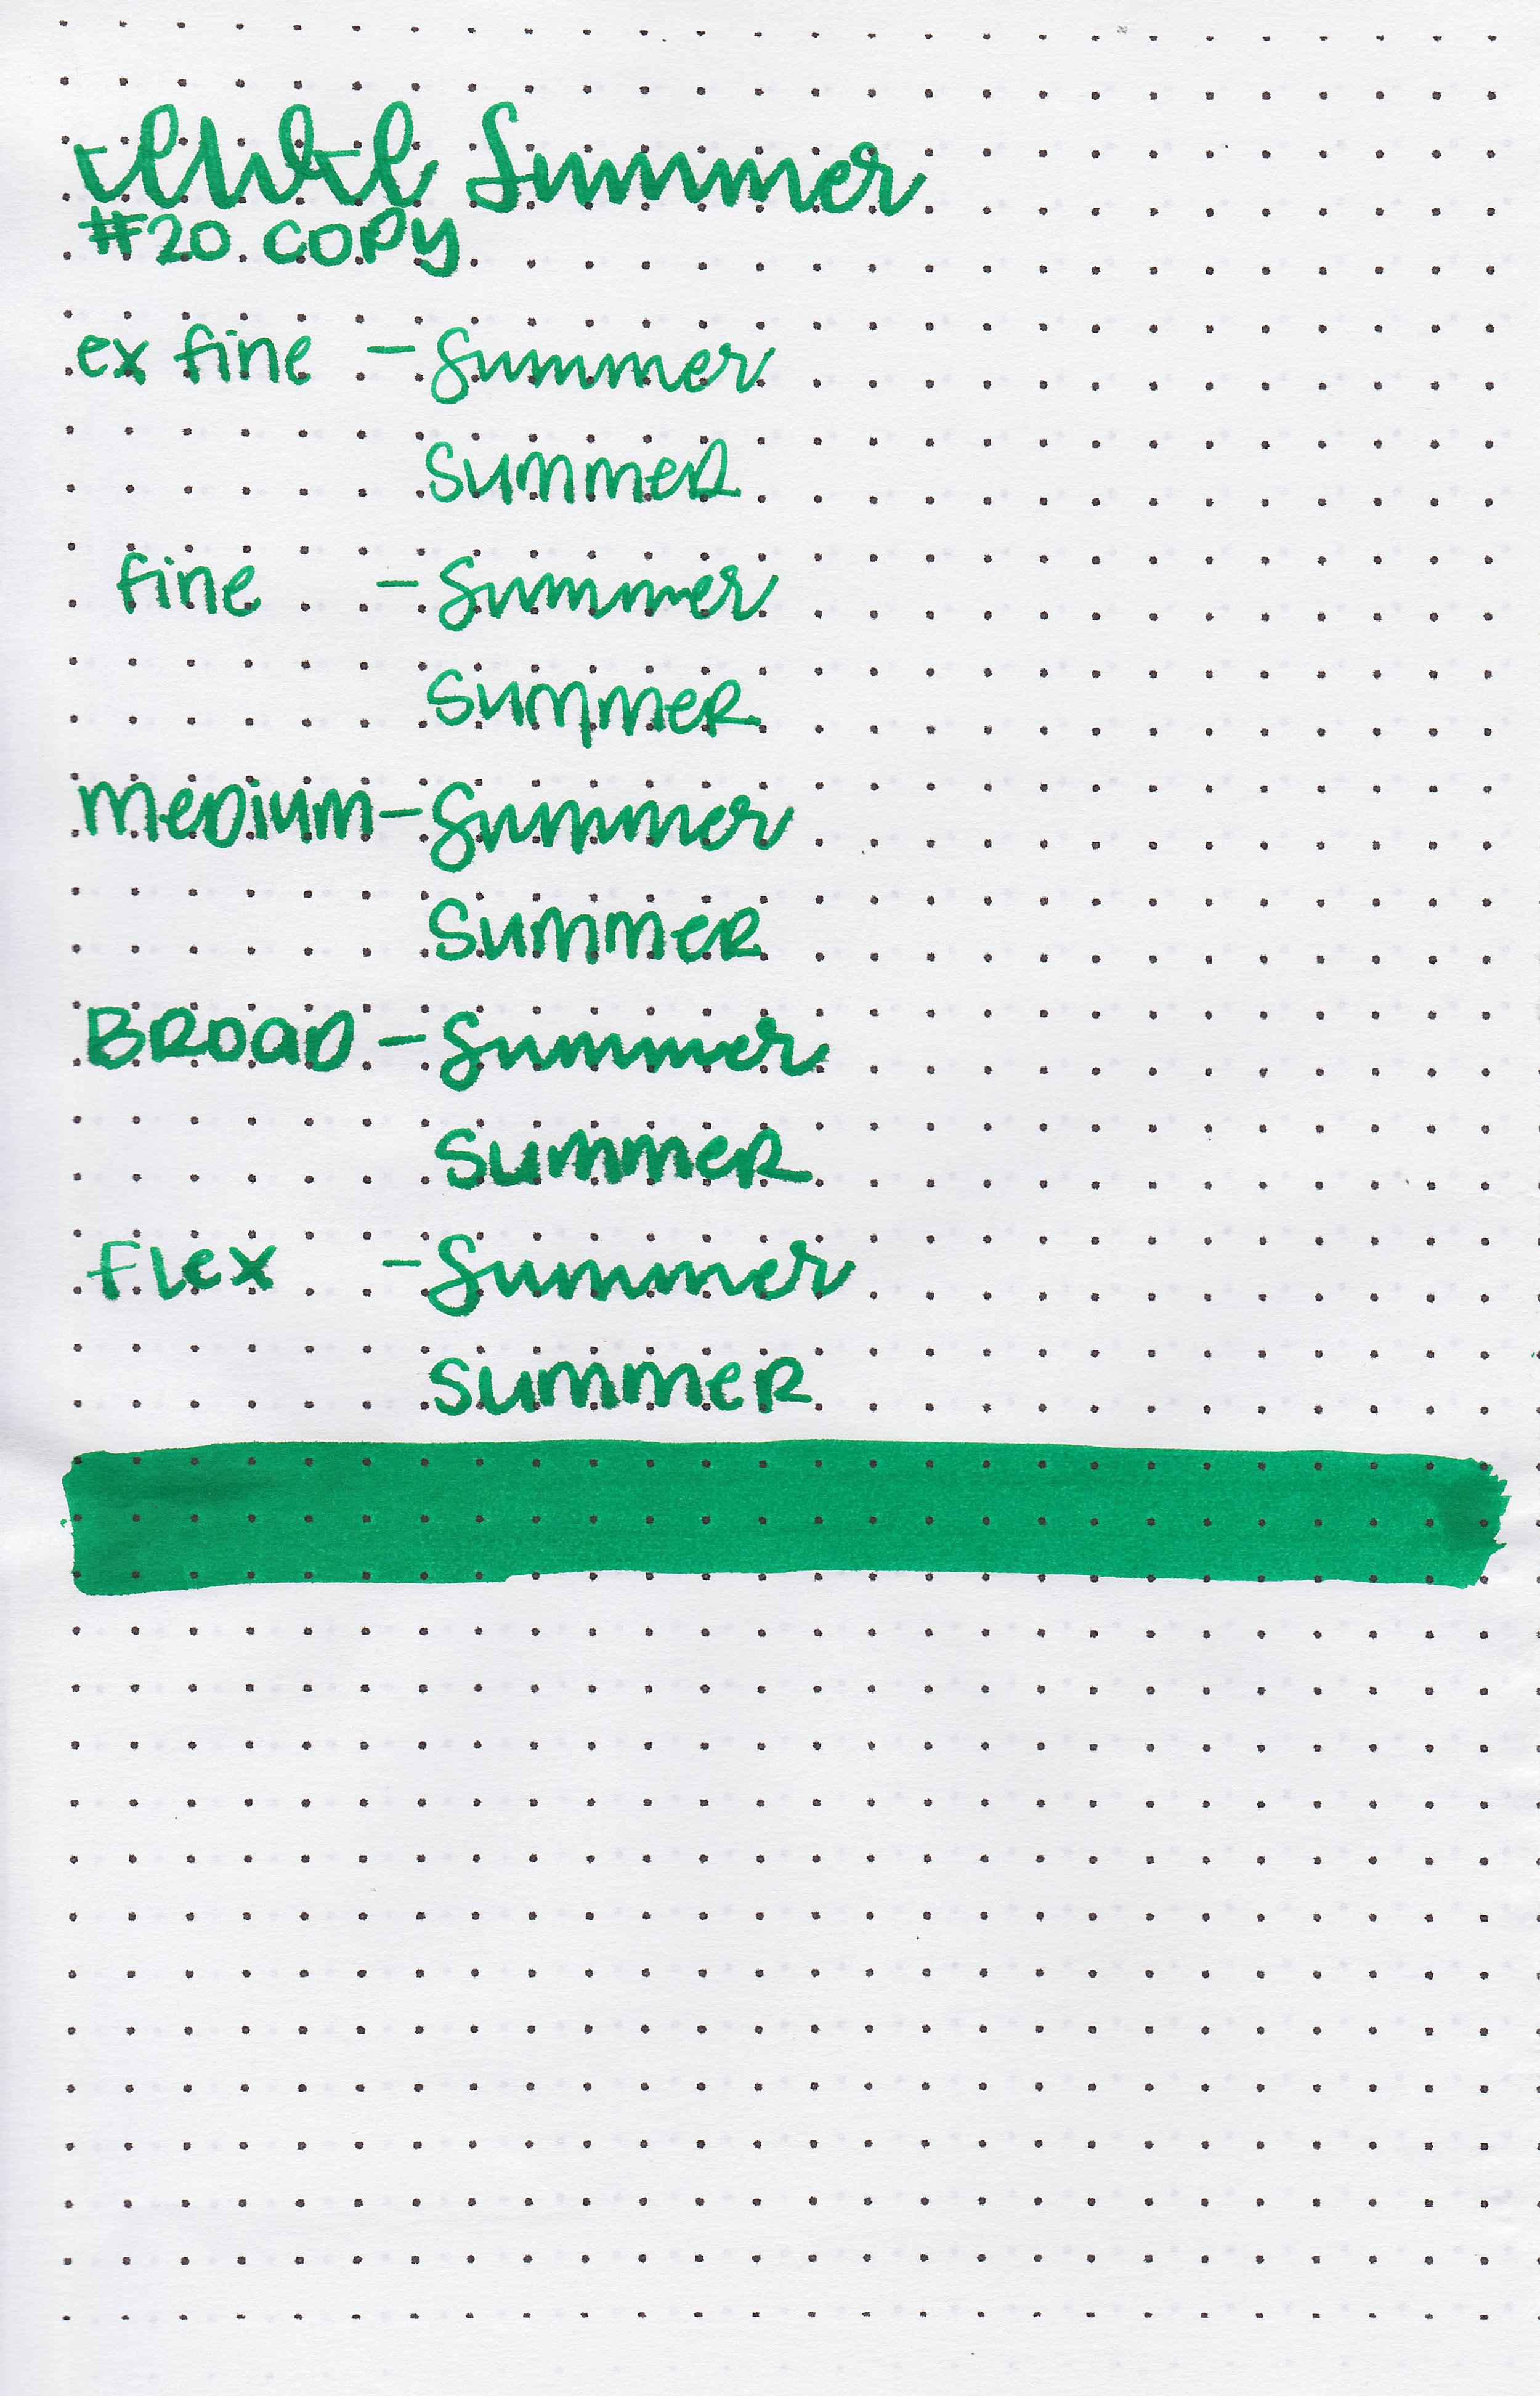 iwi-beginning-of-summer-11.jpg